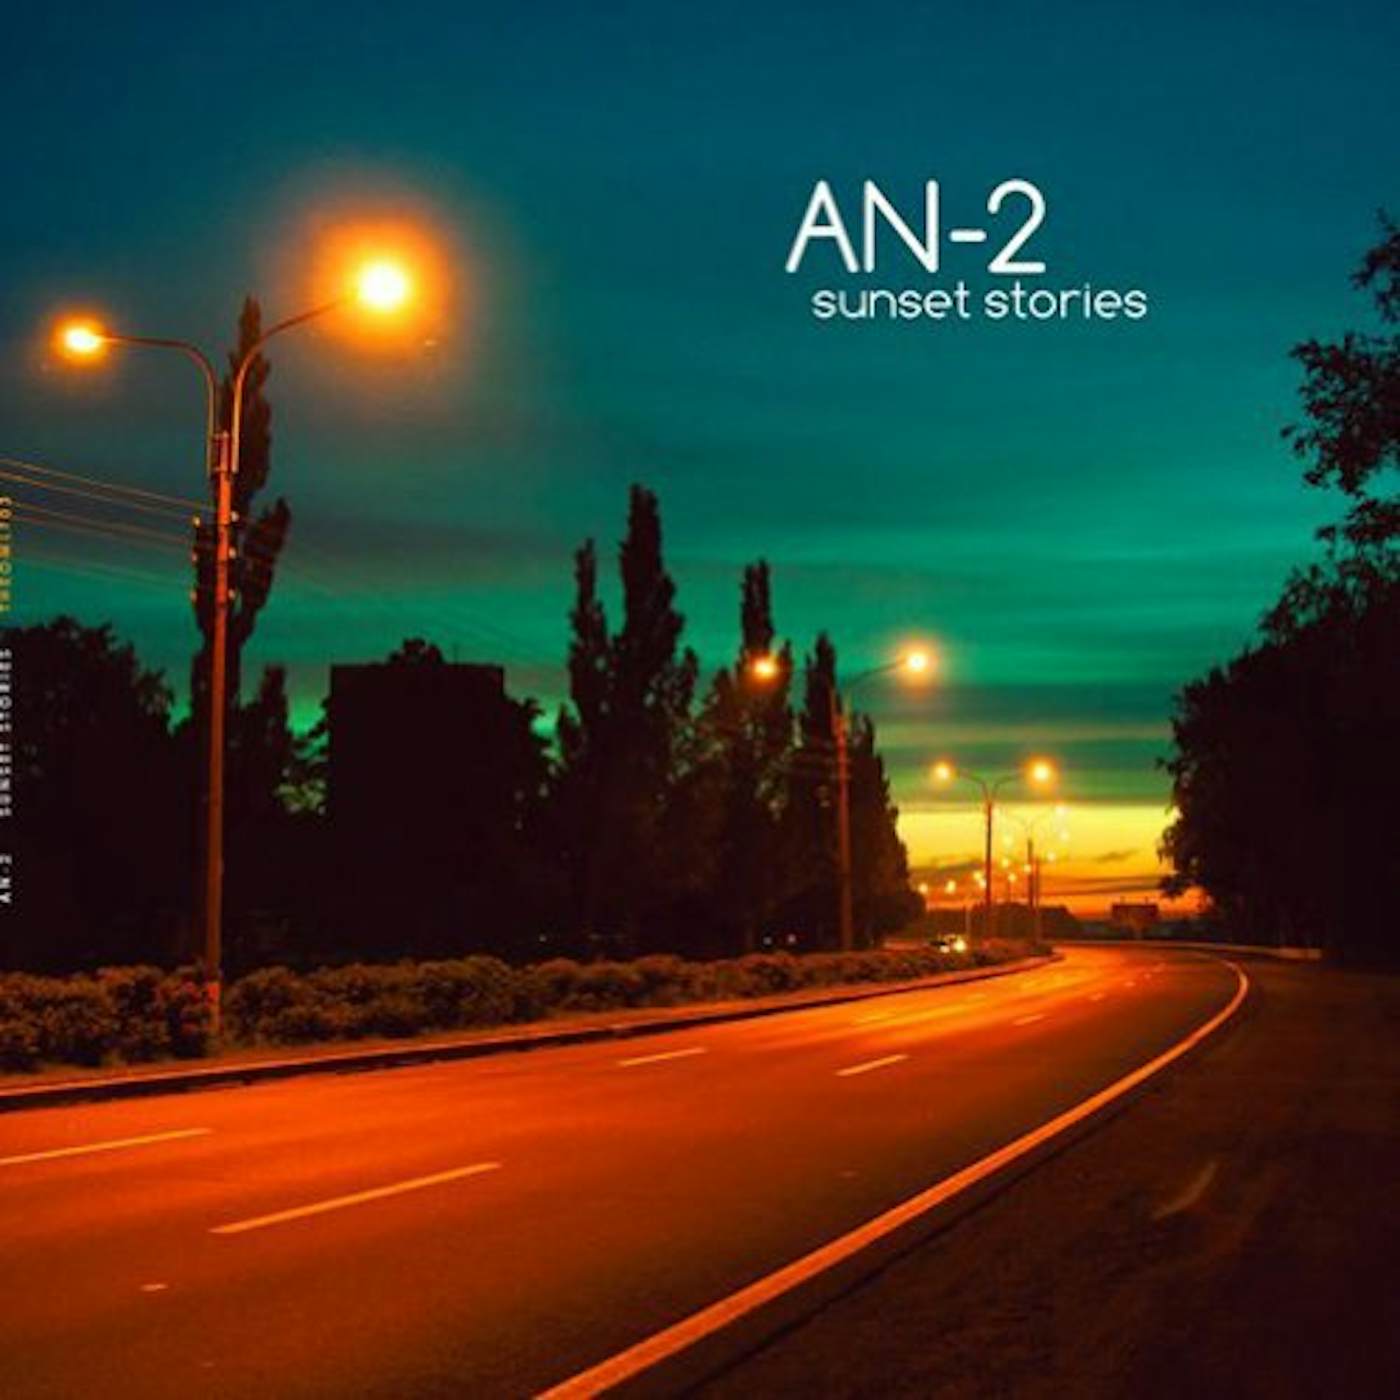 AN-2 Sunset Stories Vinyl Record